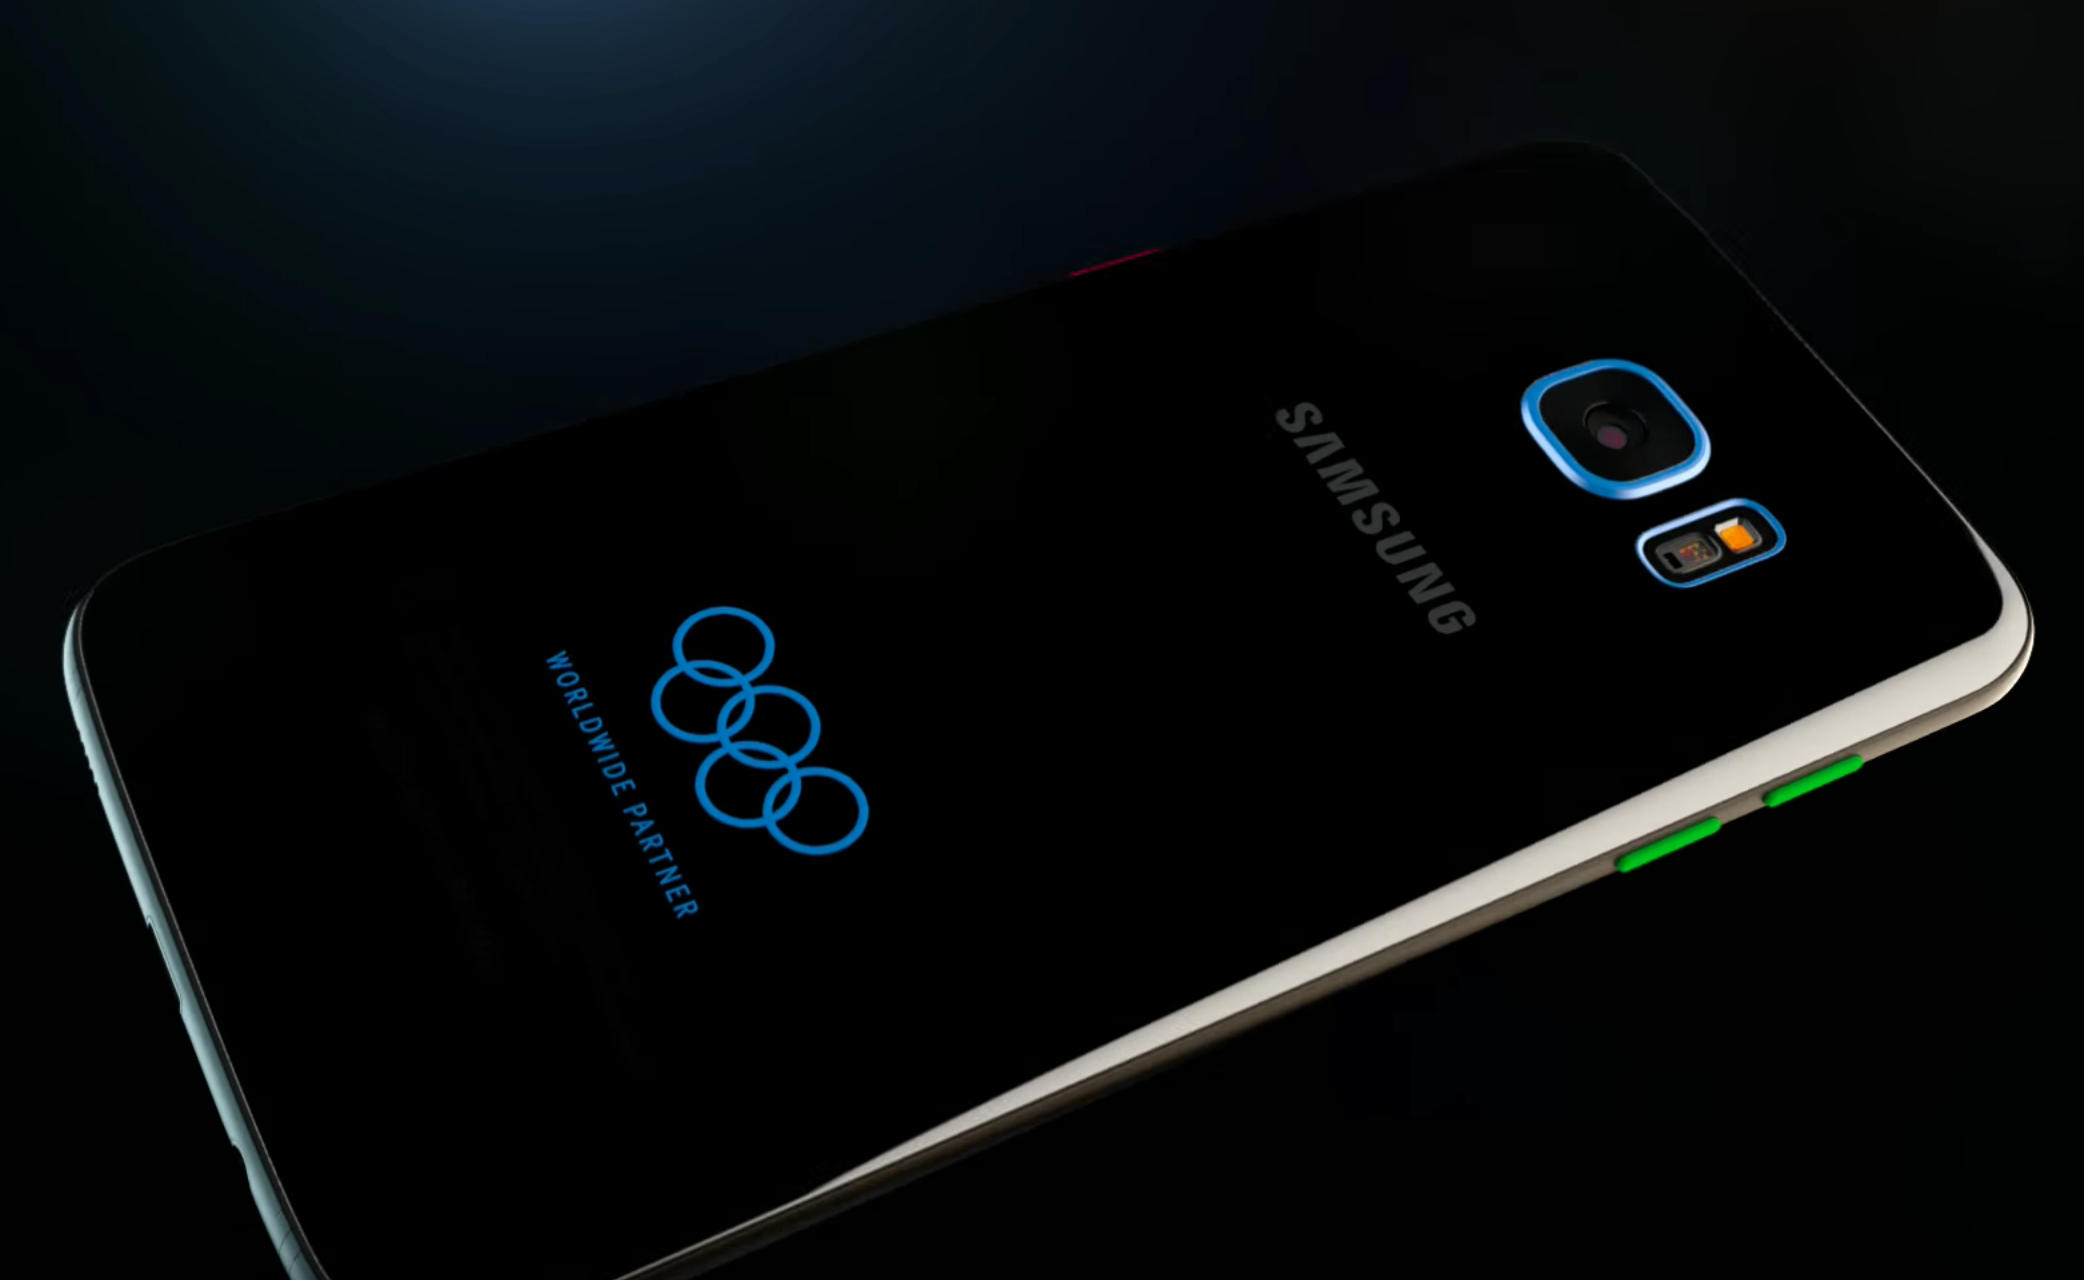 Samsung Galaxy S7 edge Olympic Games Edition